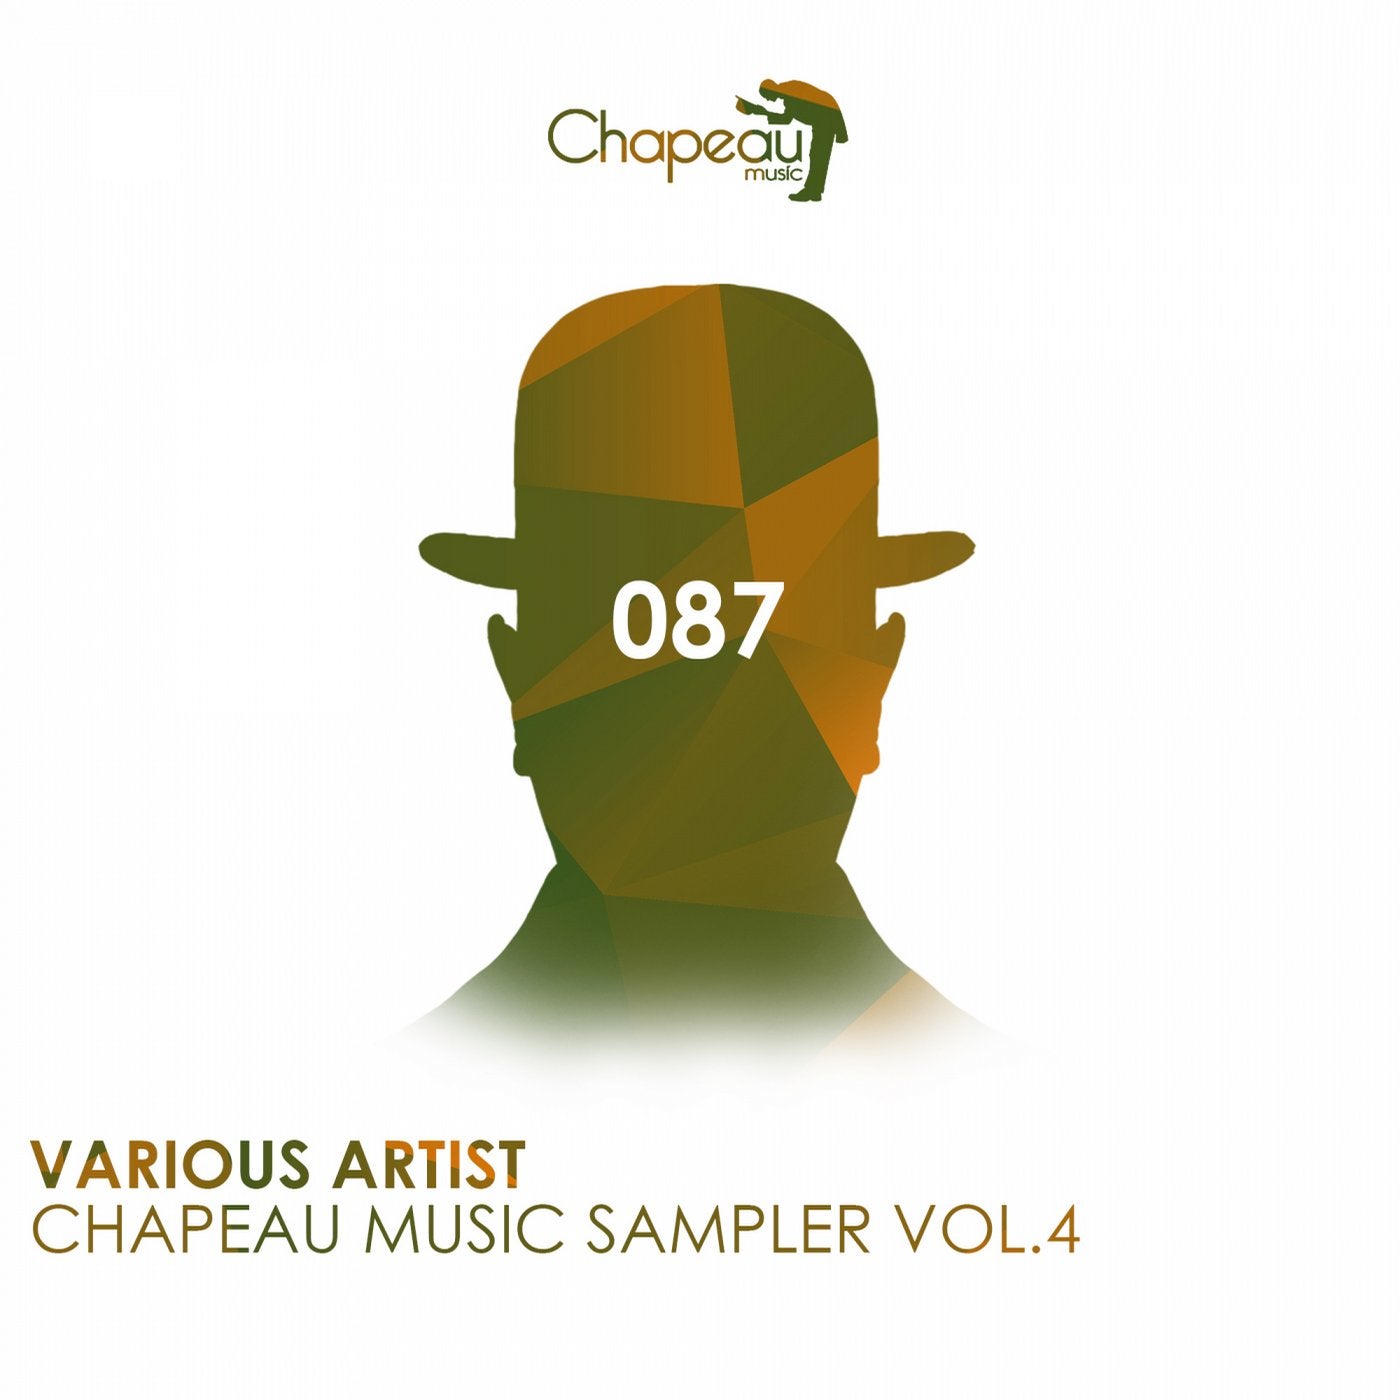 Chapeau Music Sampler Vol. 4